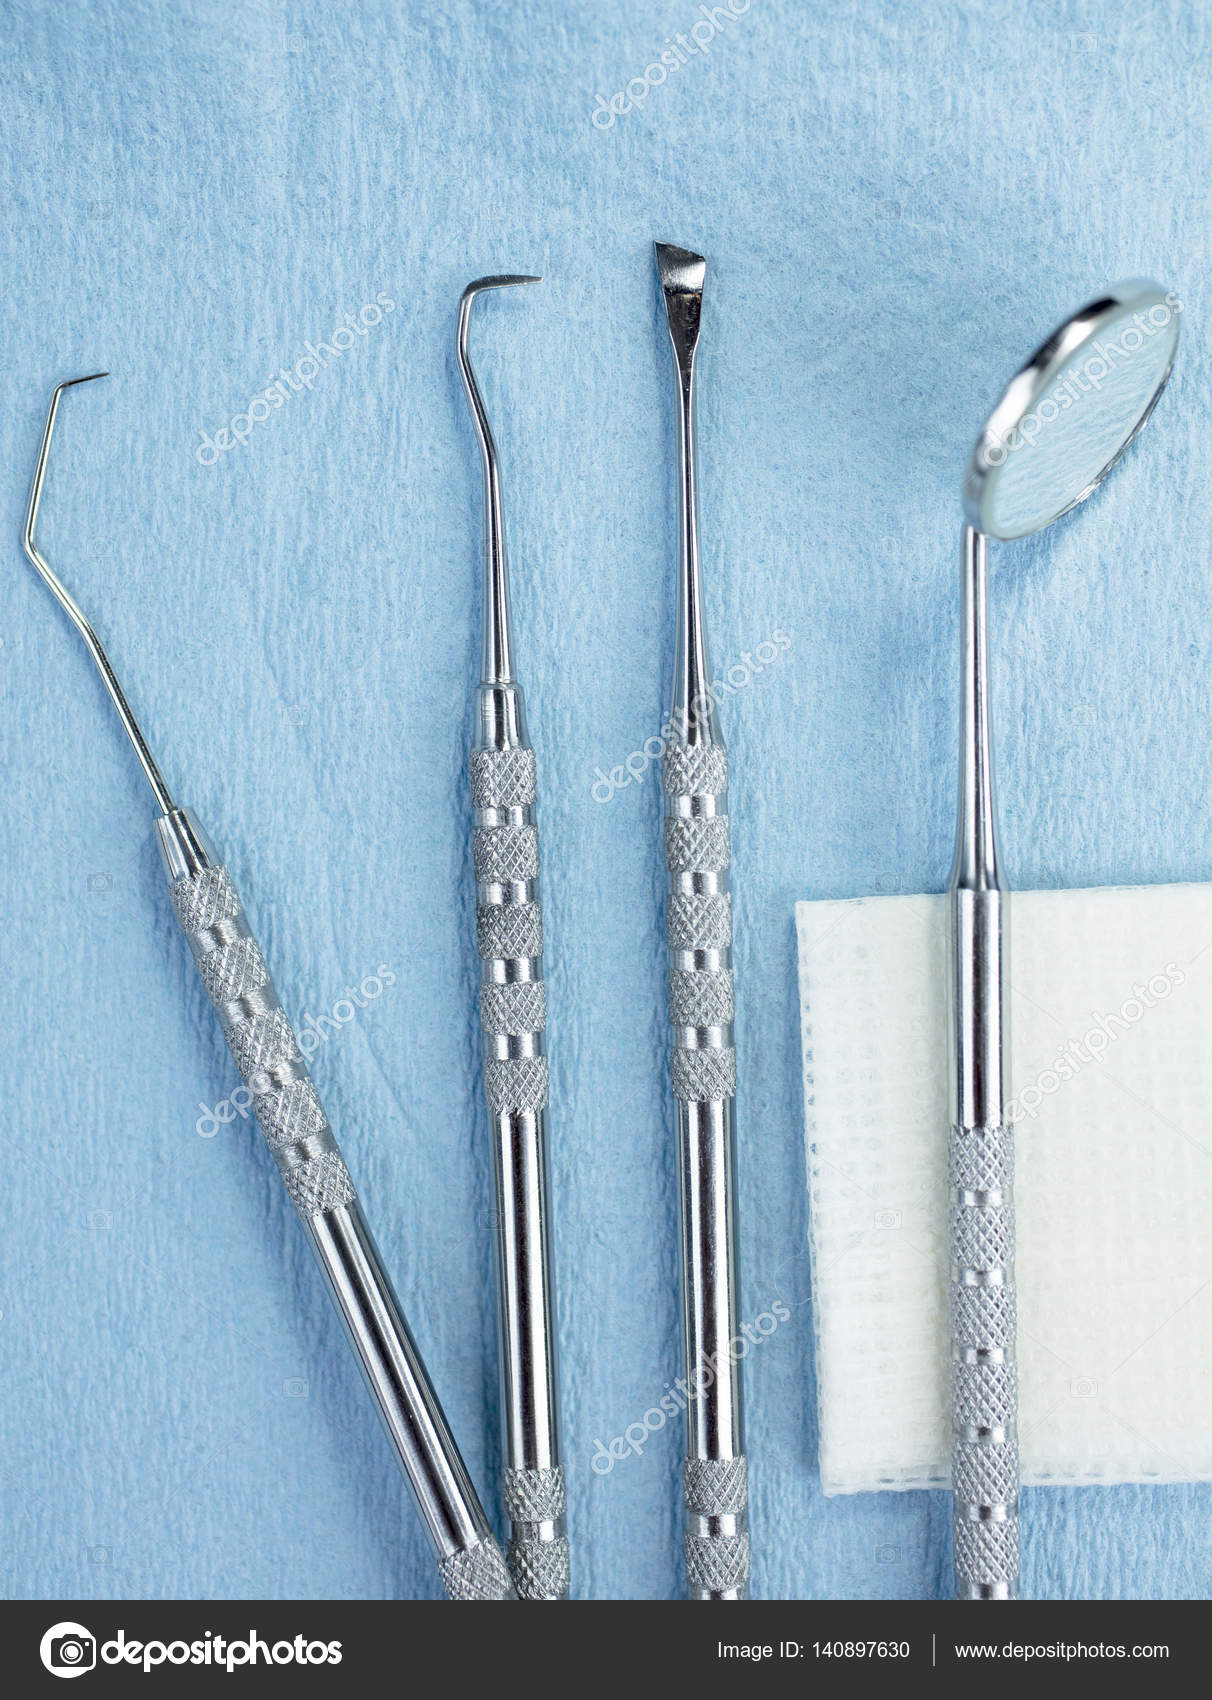 Tray of Dental Tools stock image. Image of dentist, gauze - 12539807